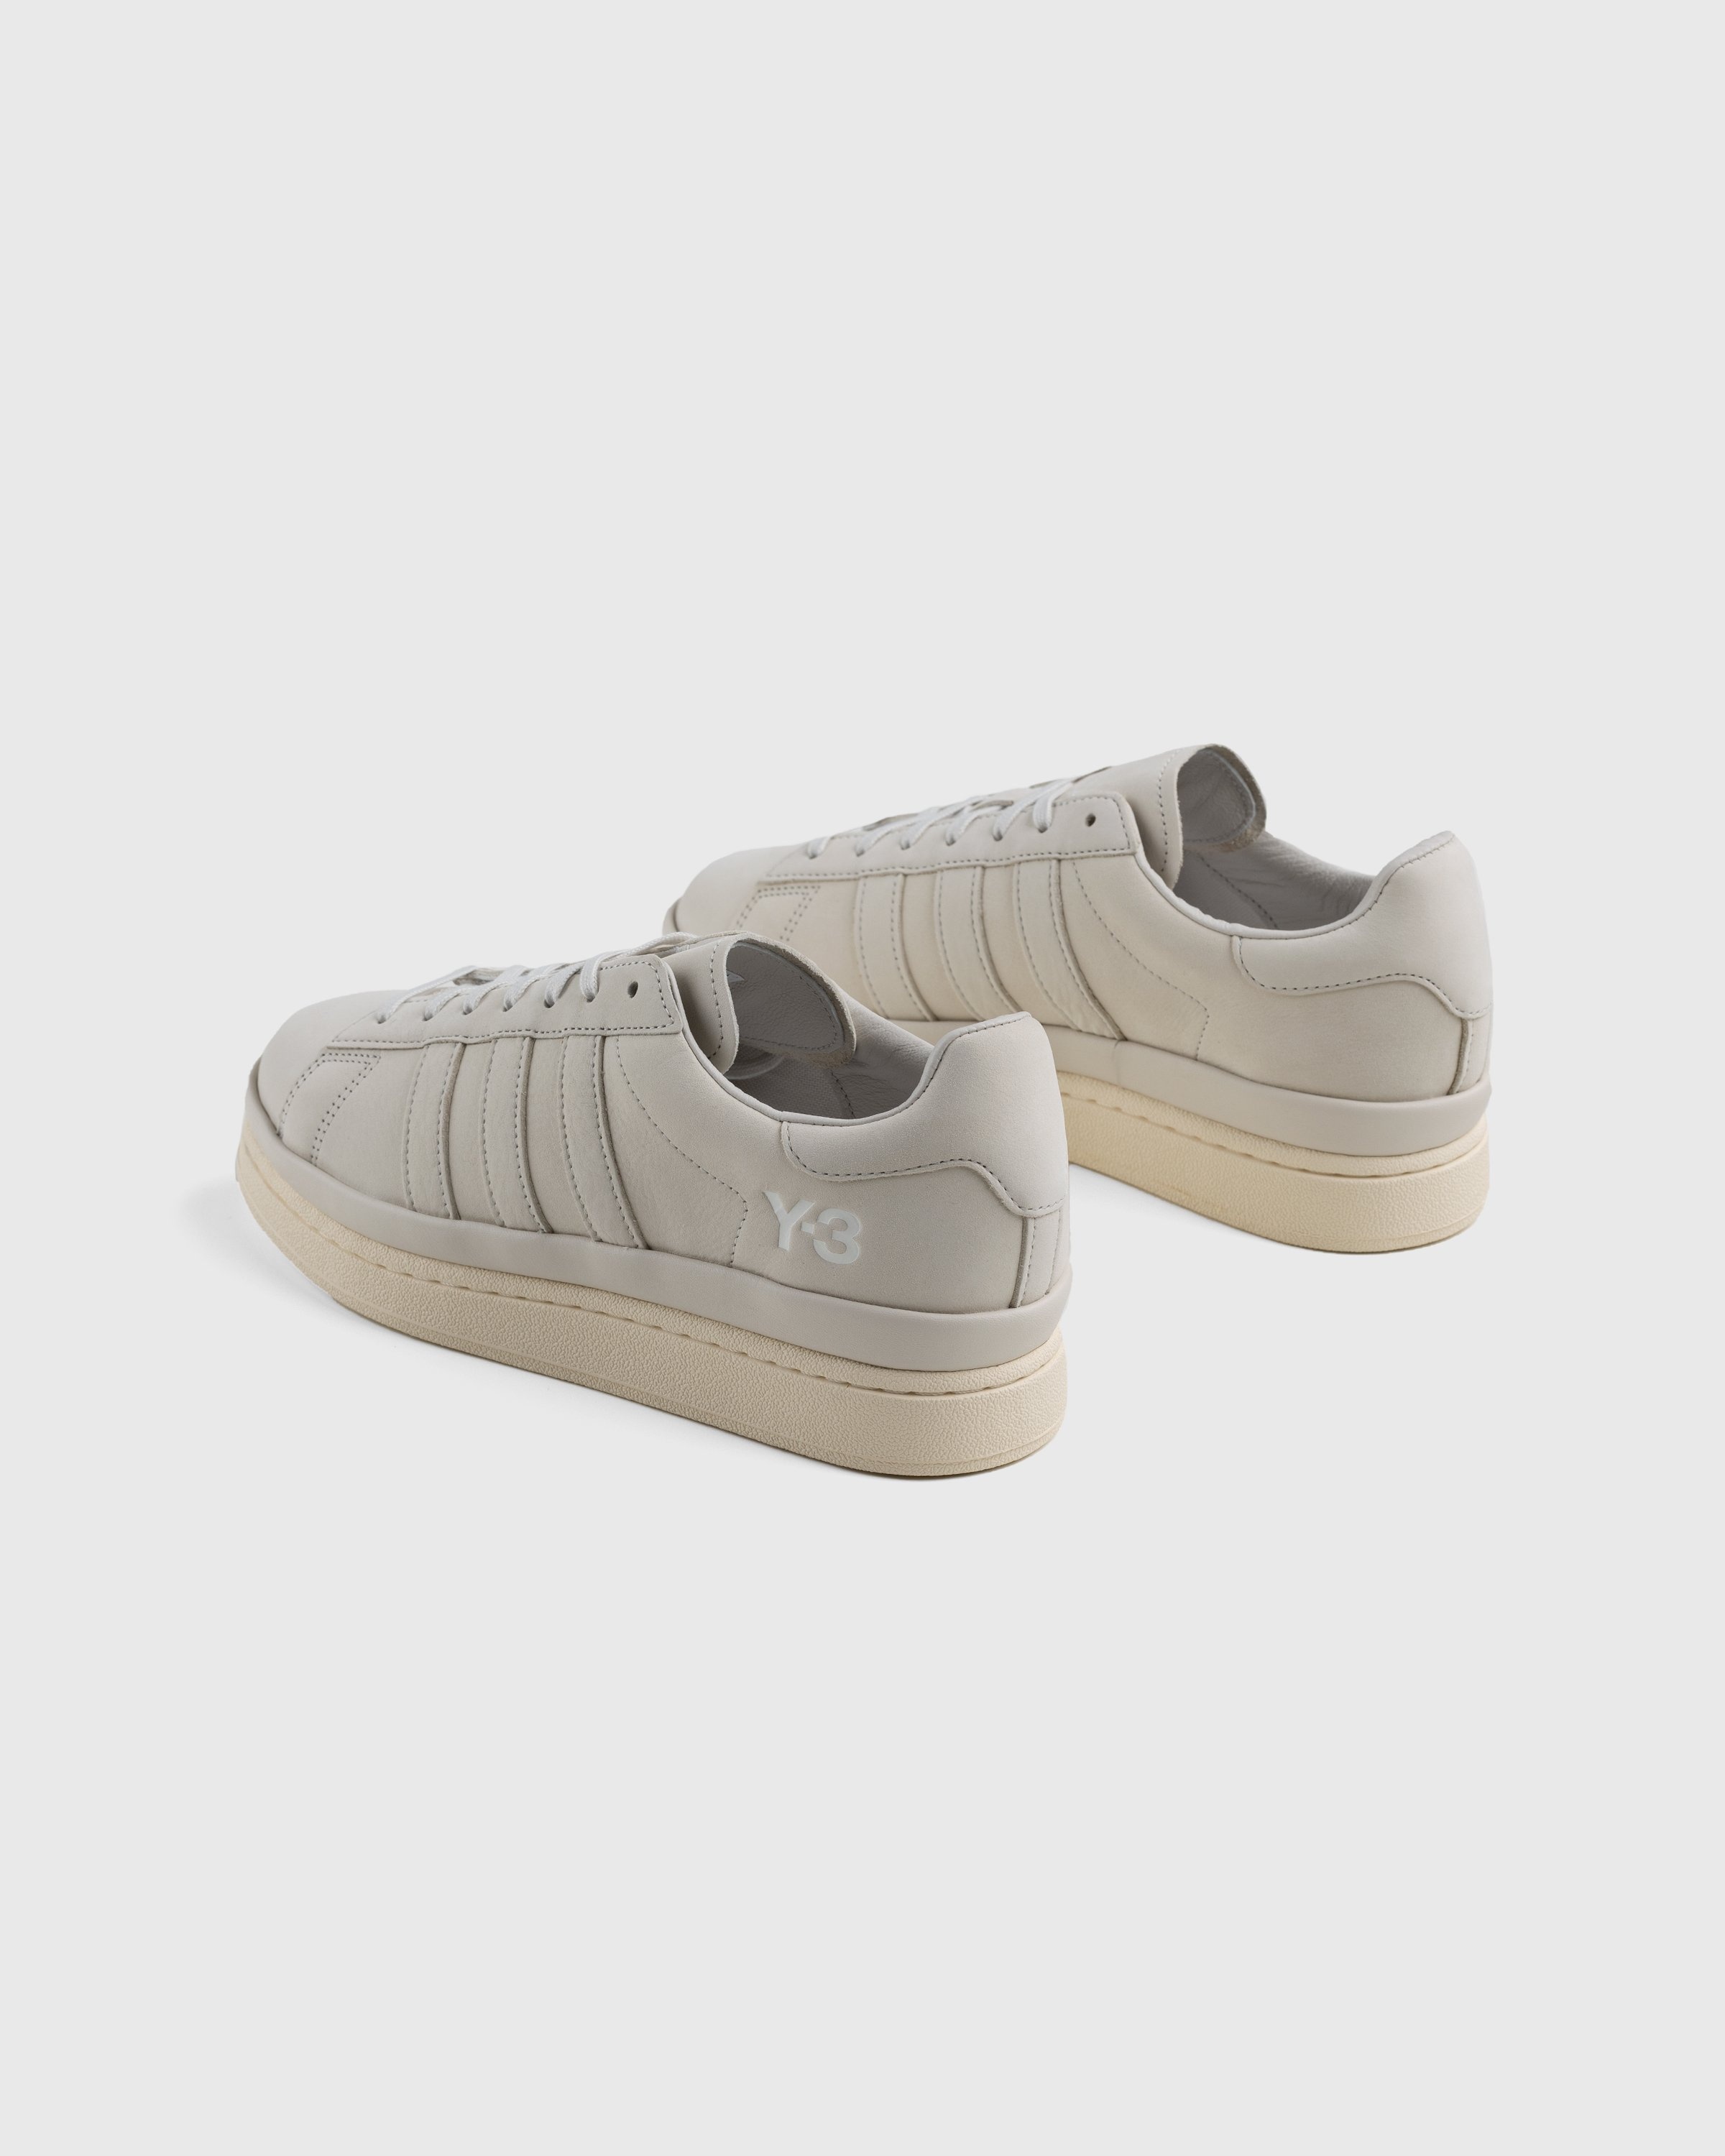 Y-3 – Hicho Grey/Cream - Sneakers - White - Image 3